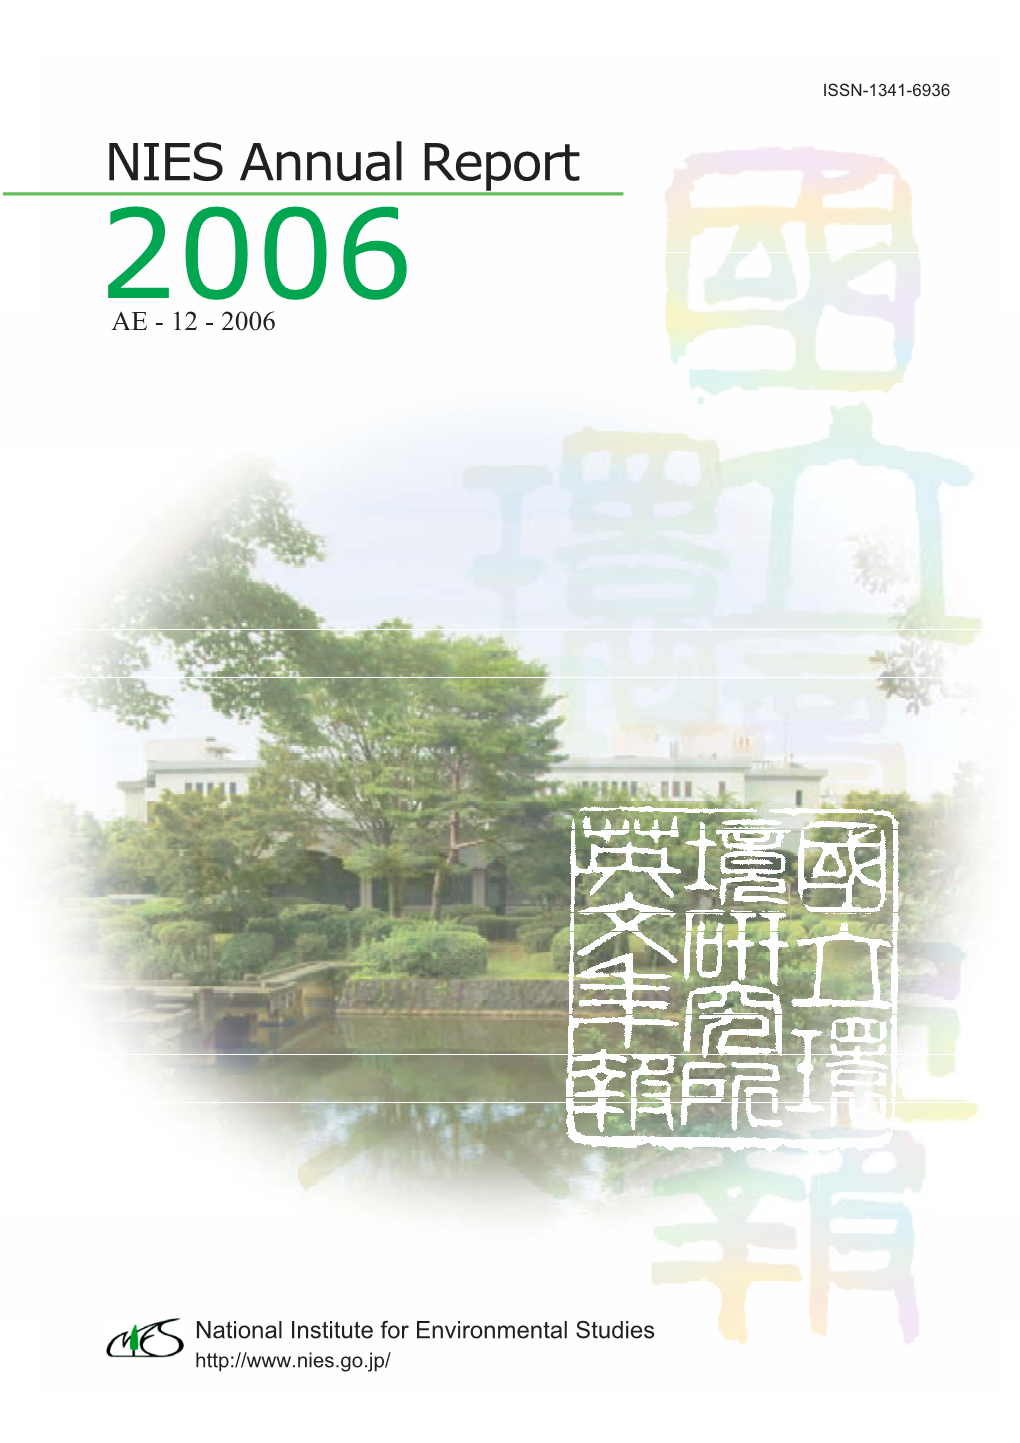 NIES Annual Report 2006 AE - 12 - 2006